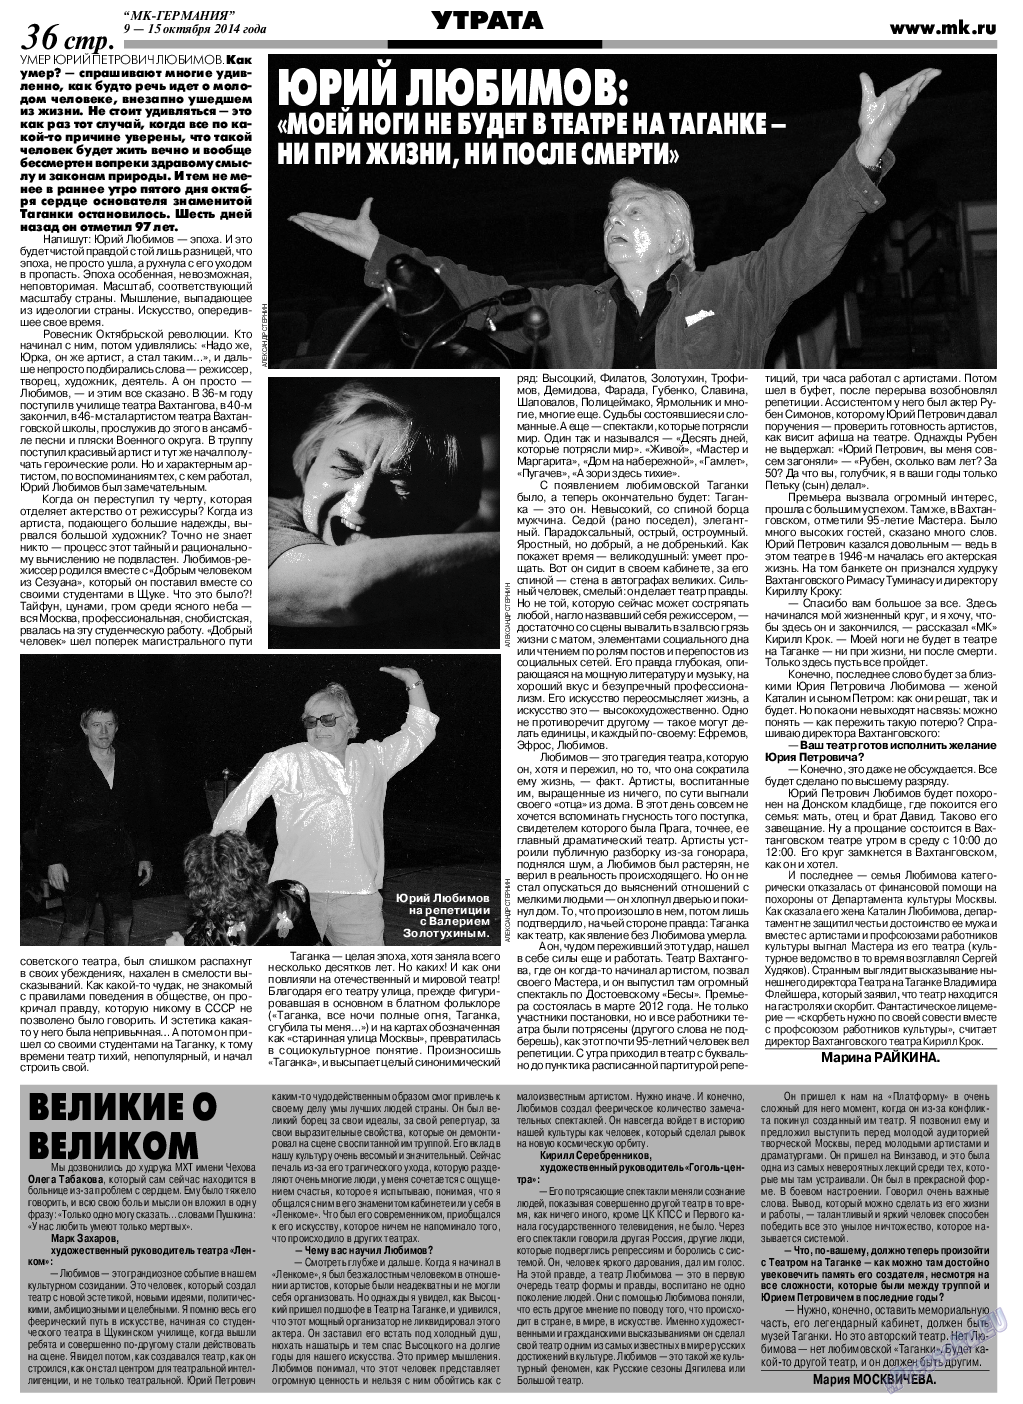 МК-Германия, газета. 2014 №41 стр.36